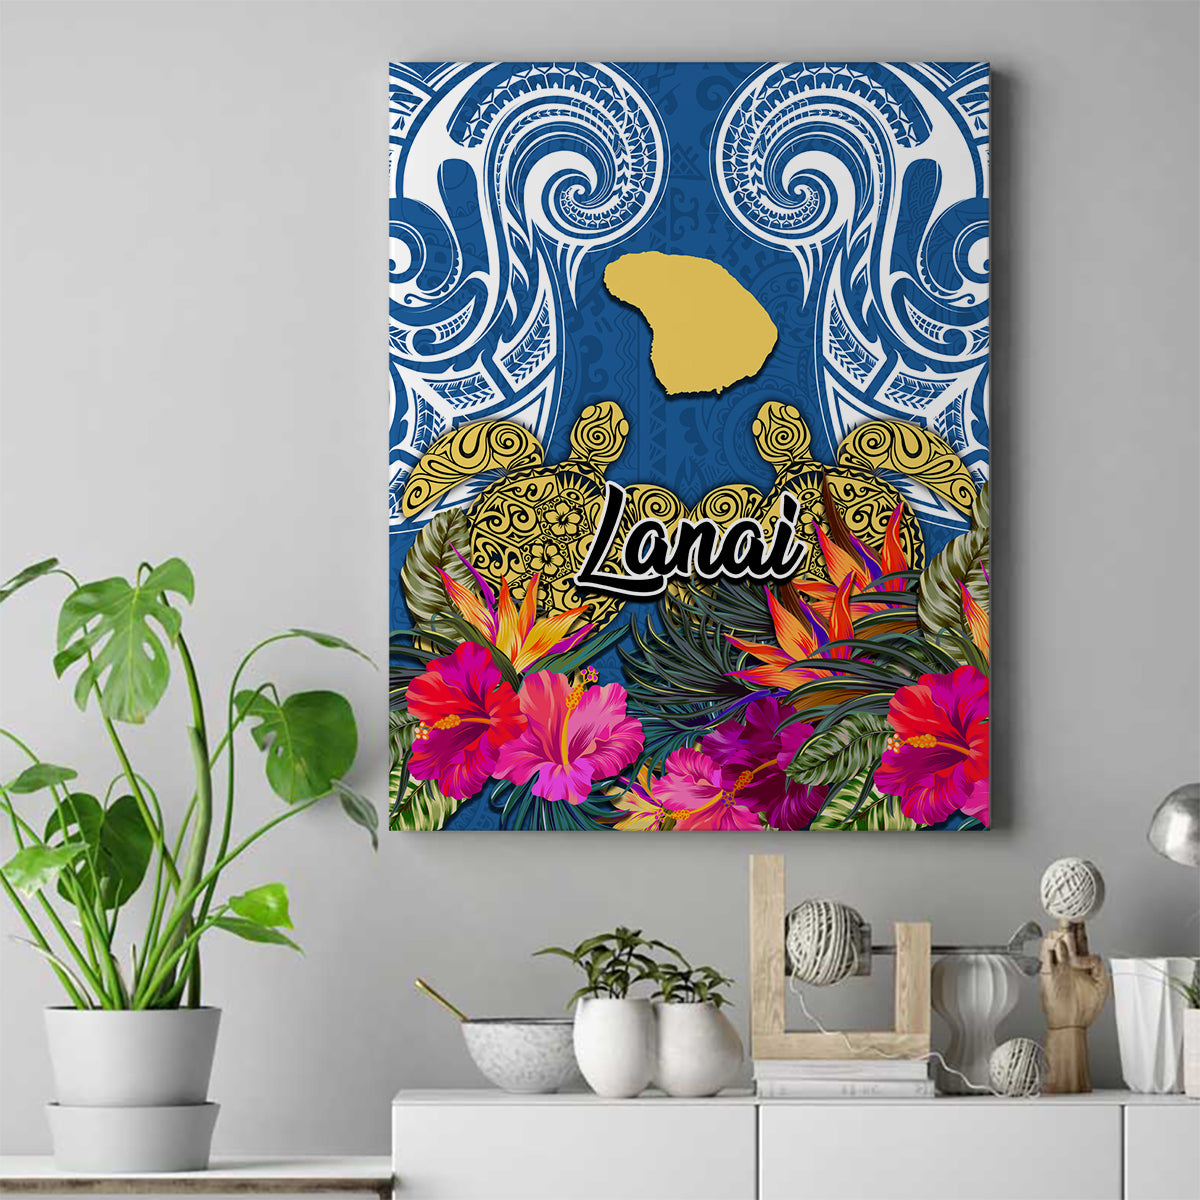 Hawaii Lanai Island Canvas Wall Art Hibiscus Turle and Map with Polynesian Spiral LT03 Blue - Polynesian Pride